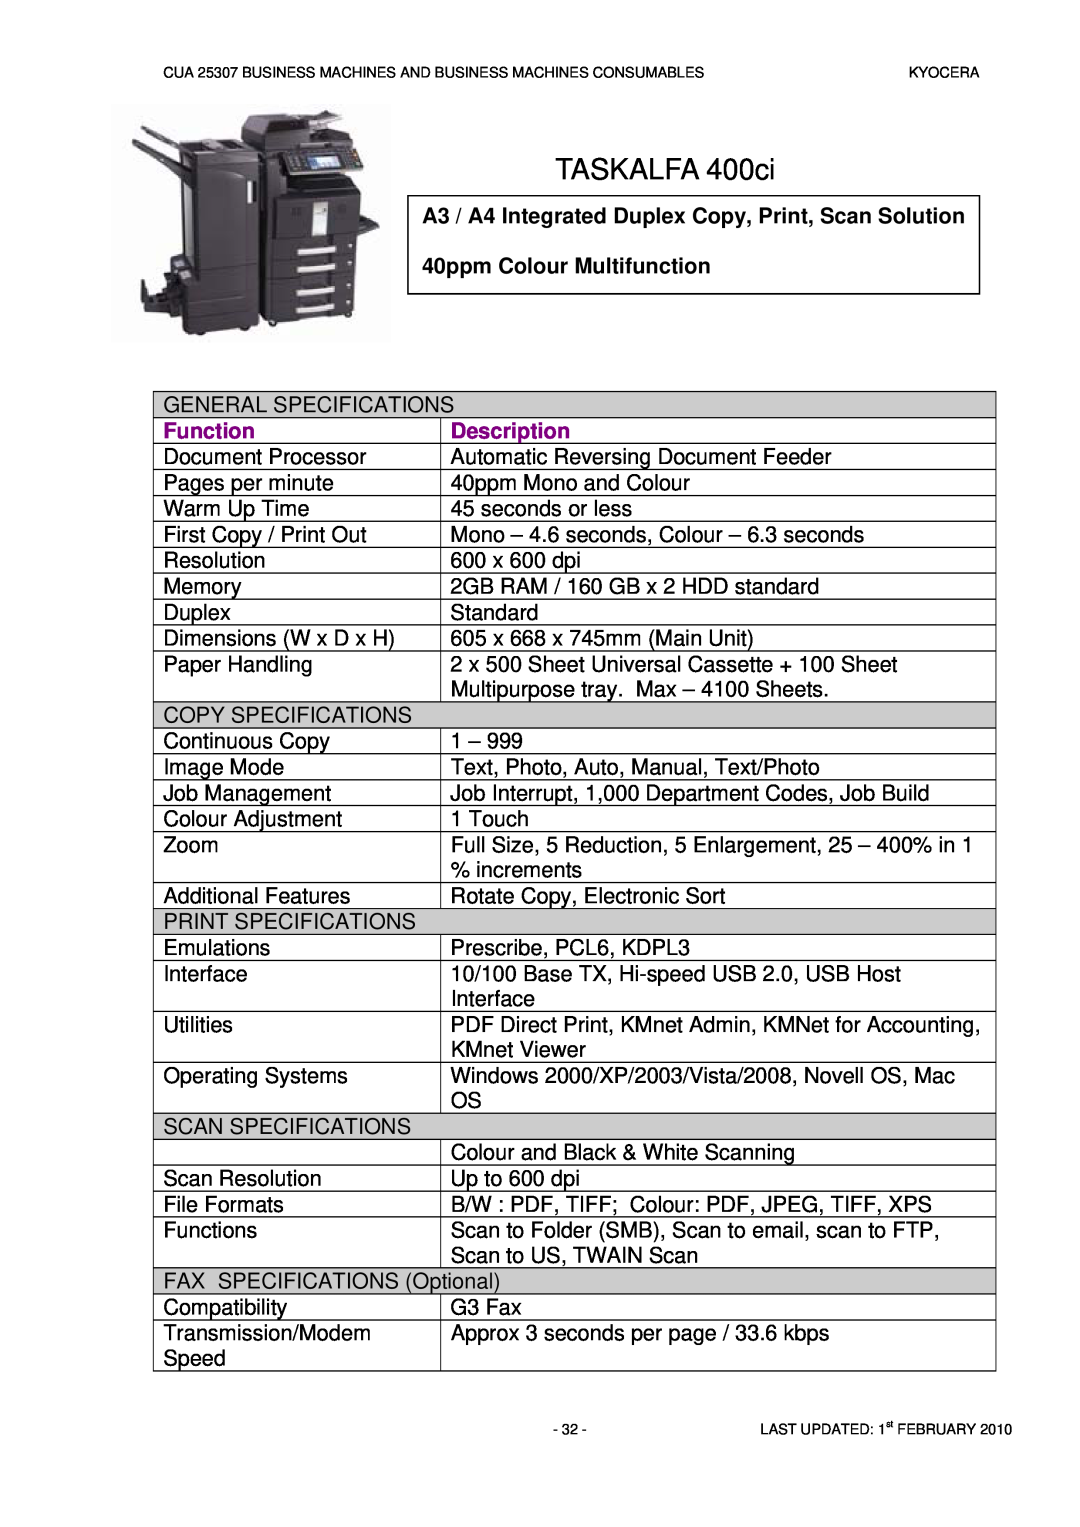 Kyocera CUA 25307 manual TASKALFA 400ci, 40ppm Colour Multifunction, Function, Description 